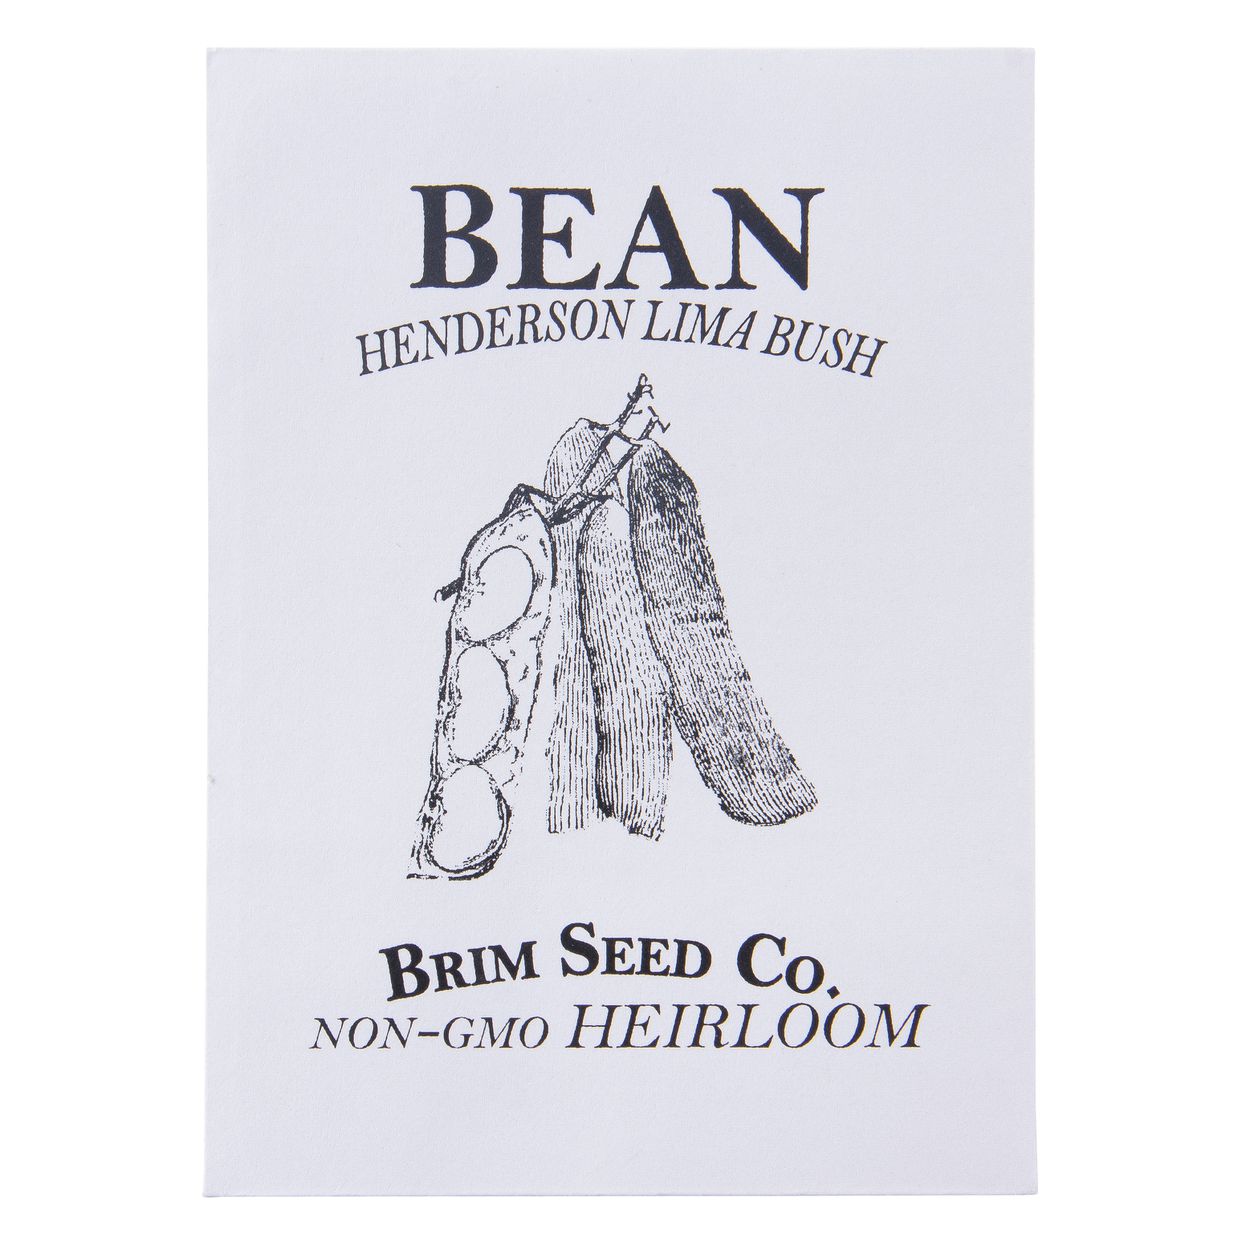 Brim Seed Co. - Henderson Lima Bush Bean Heirloom Seed